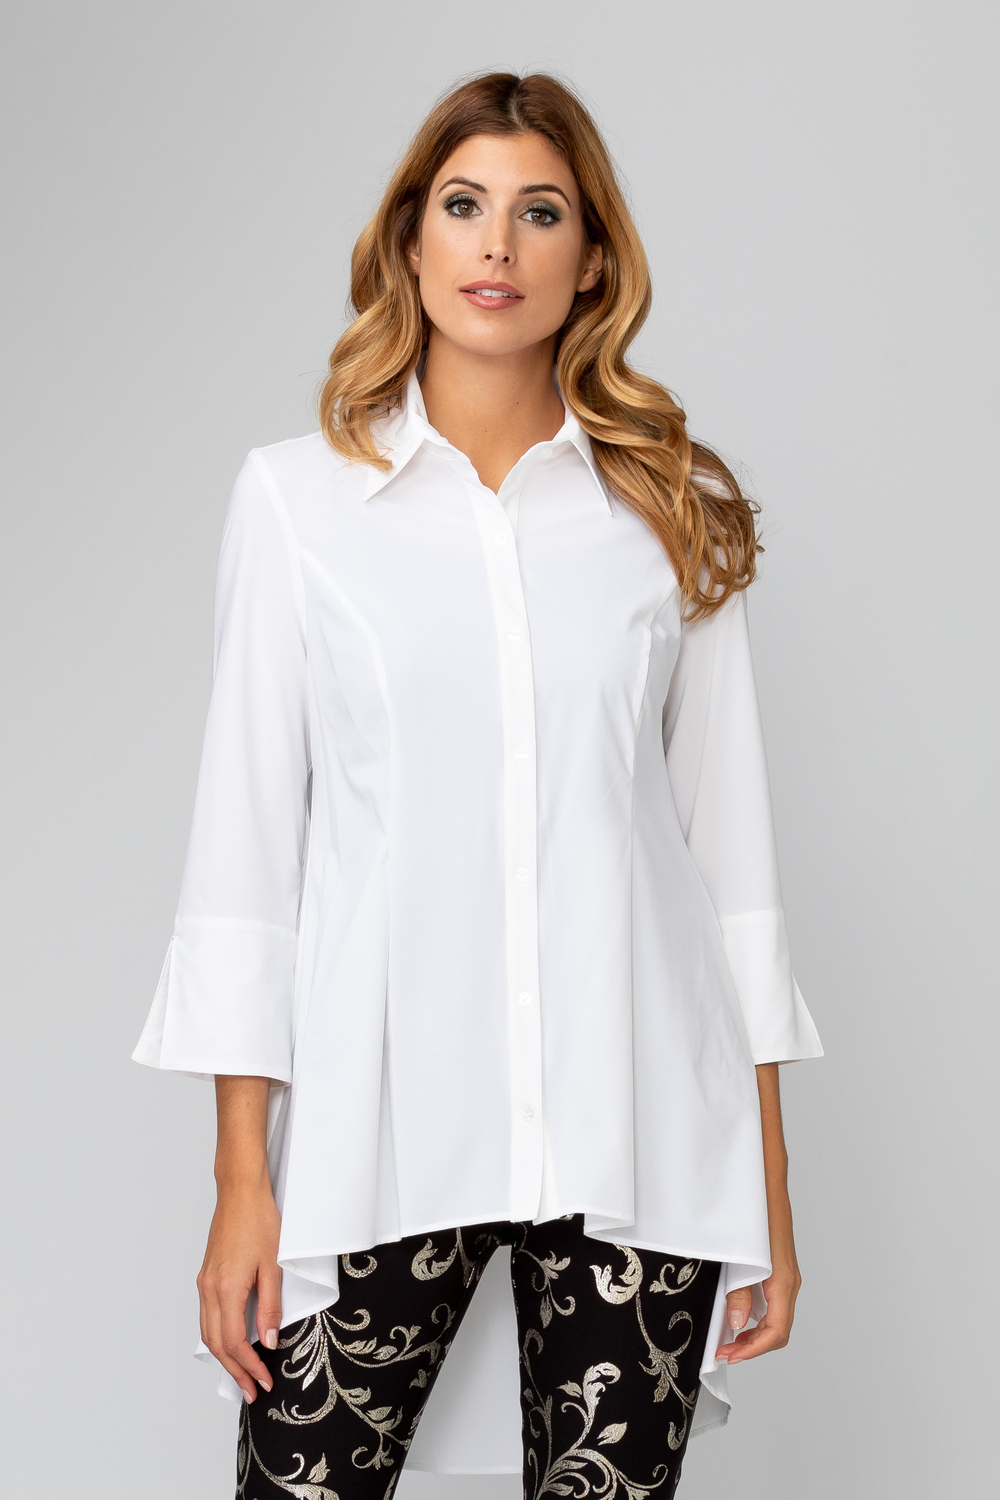 Joseph Ribkoff blouse style 193418. White